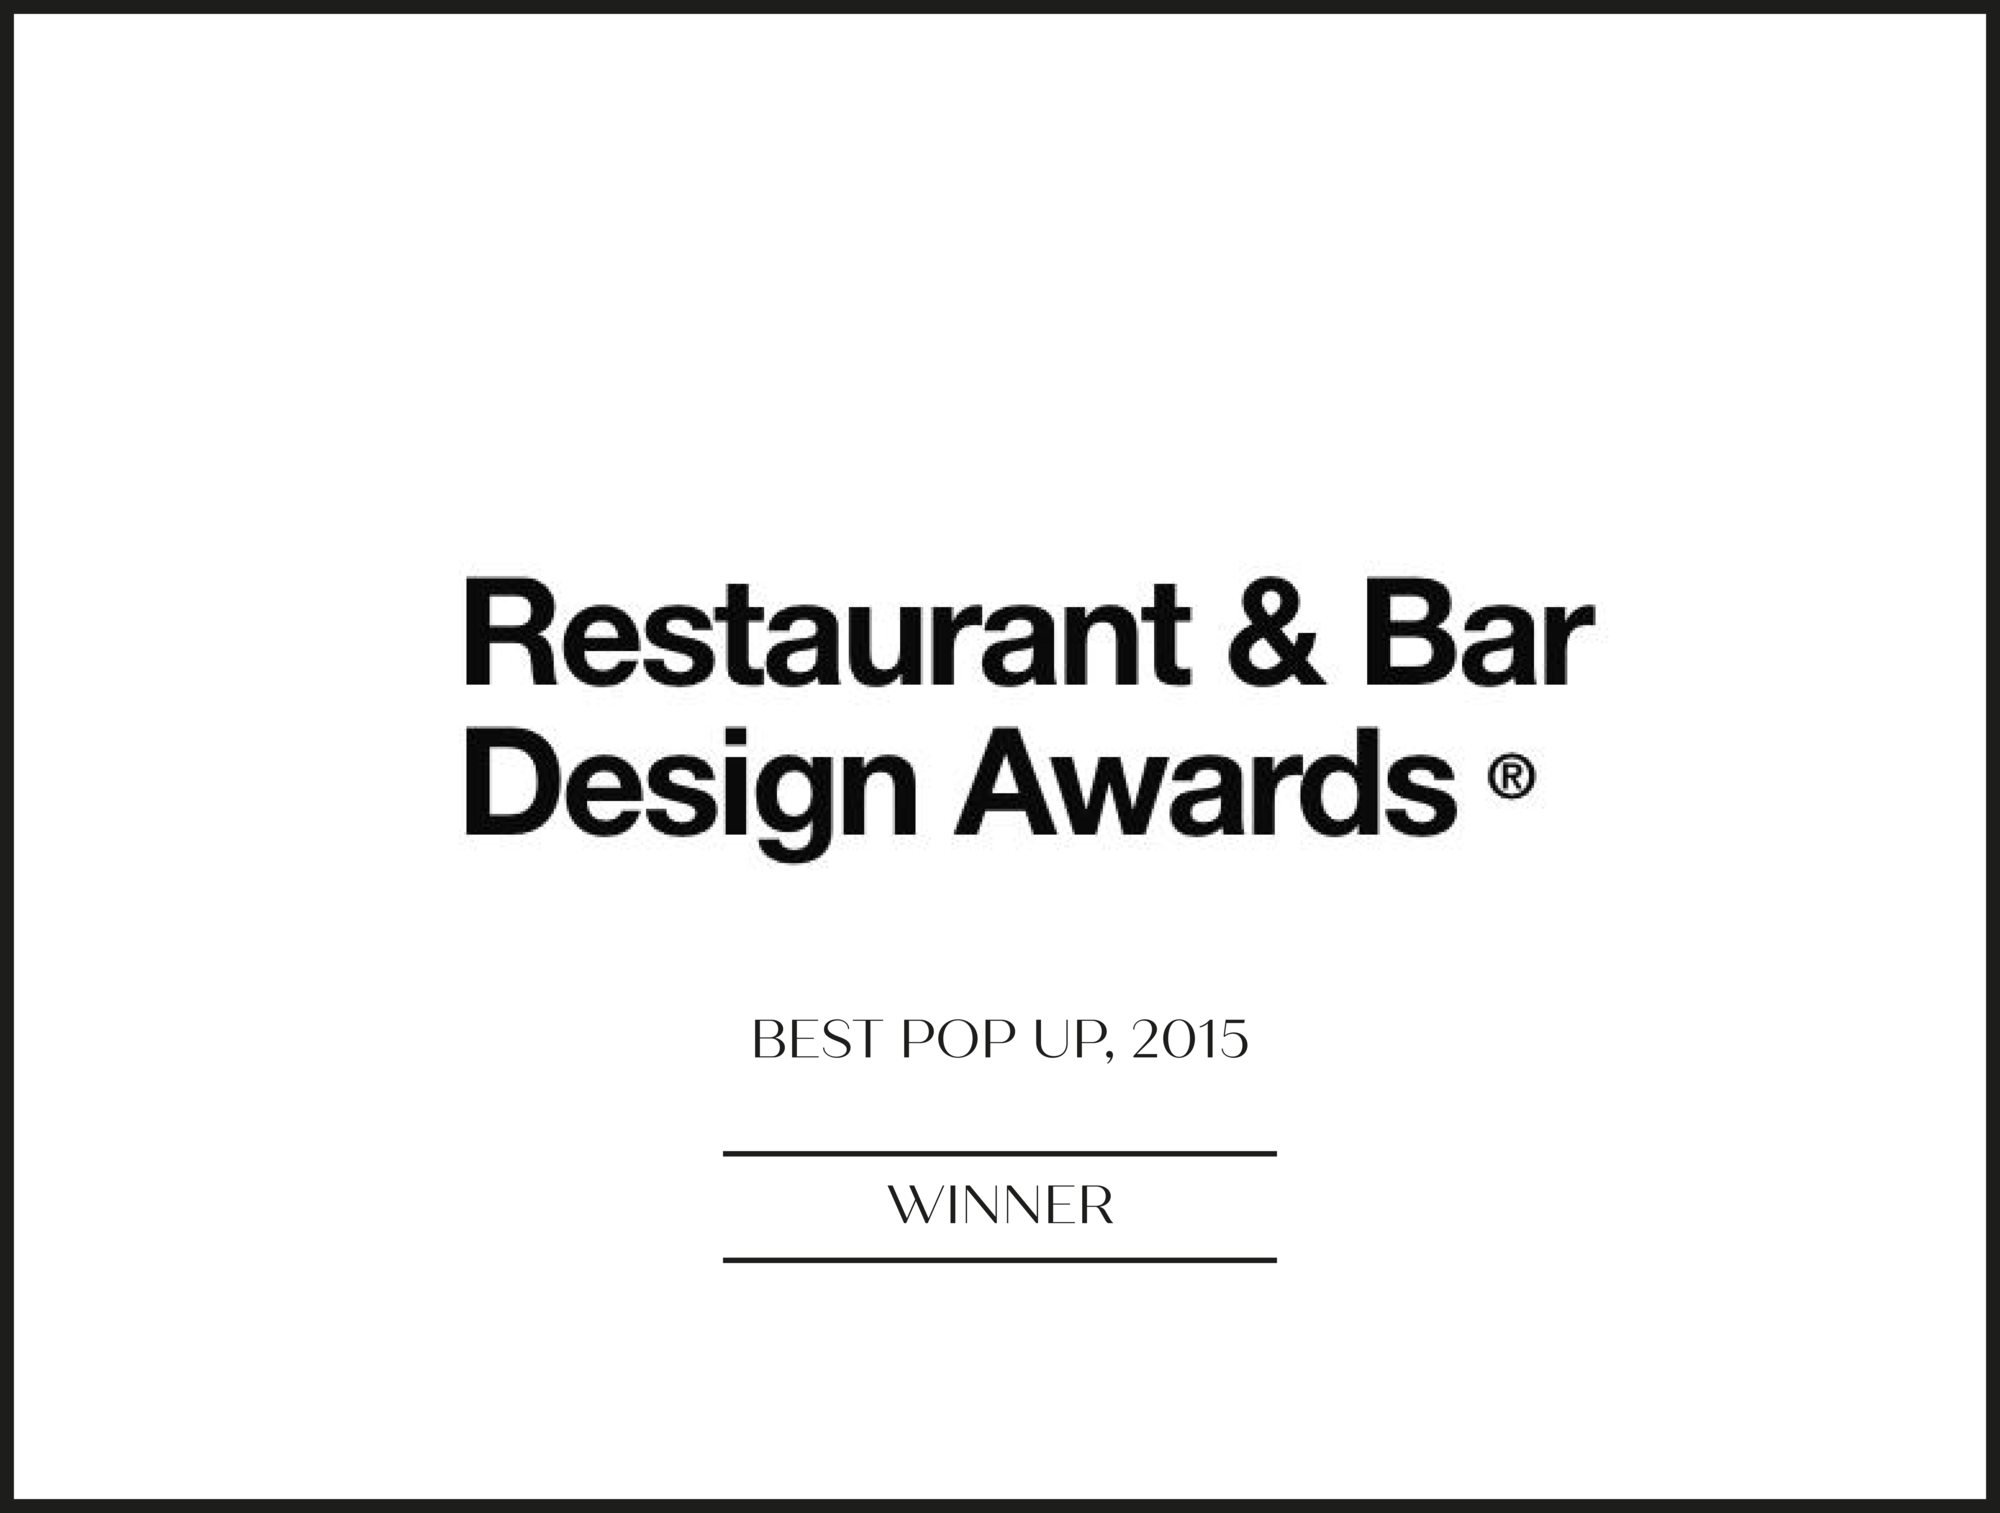 As seen in Restaurant & Bar Design Awards